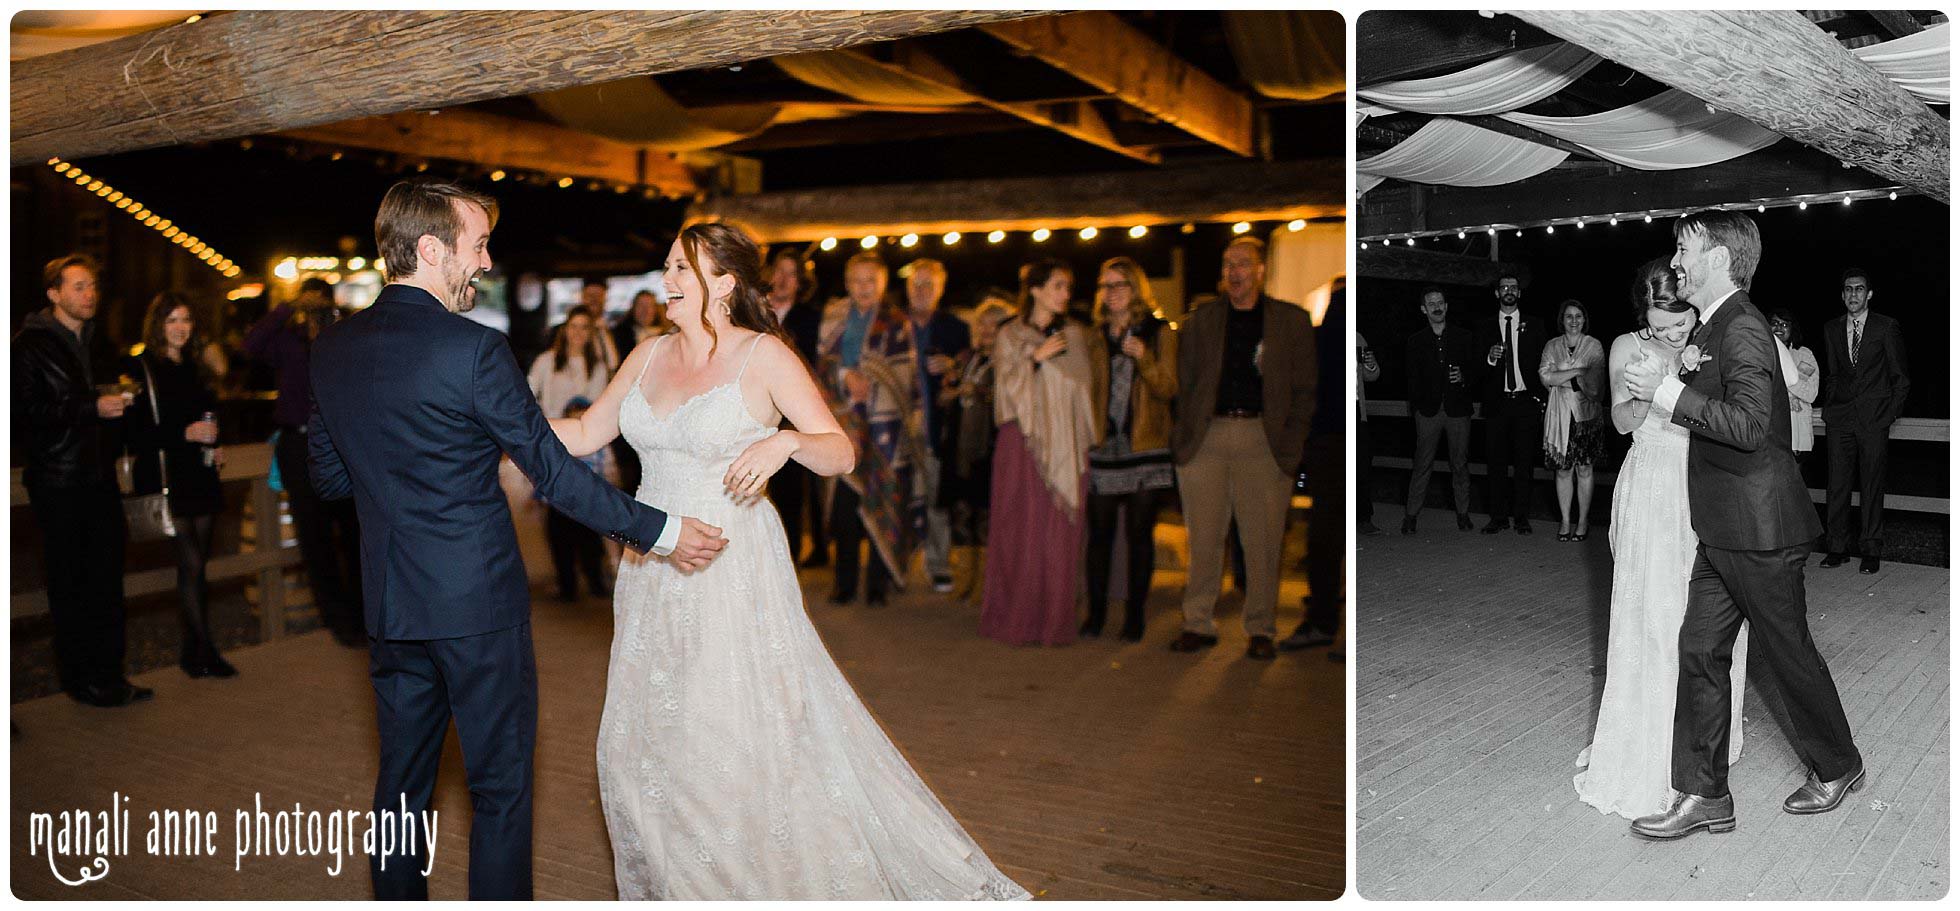 Reinstein Ranch Livermore Wedding, Bay Area Wedding Photos, East Bay Wedding Locations, Wedding Reception, The First Dance